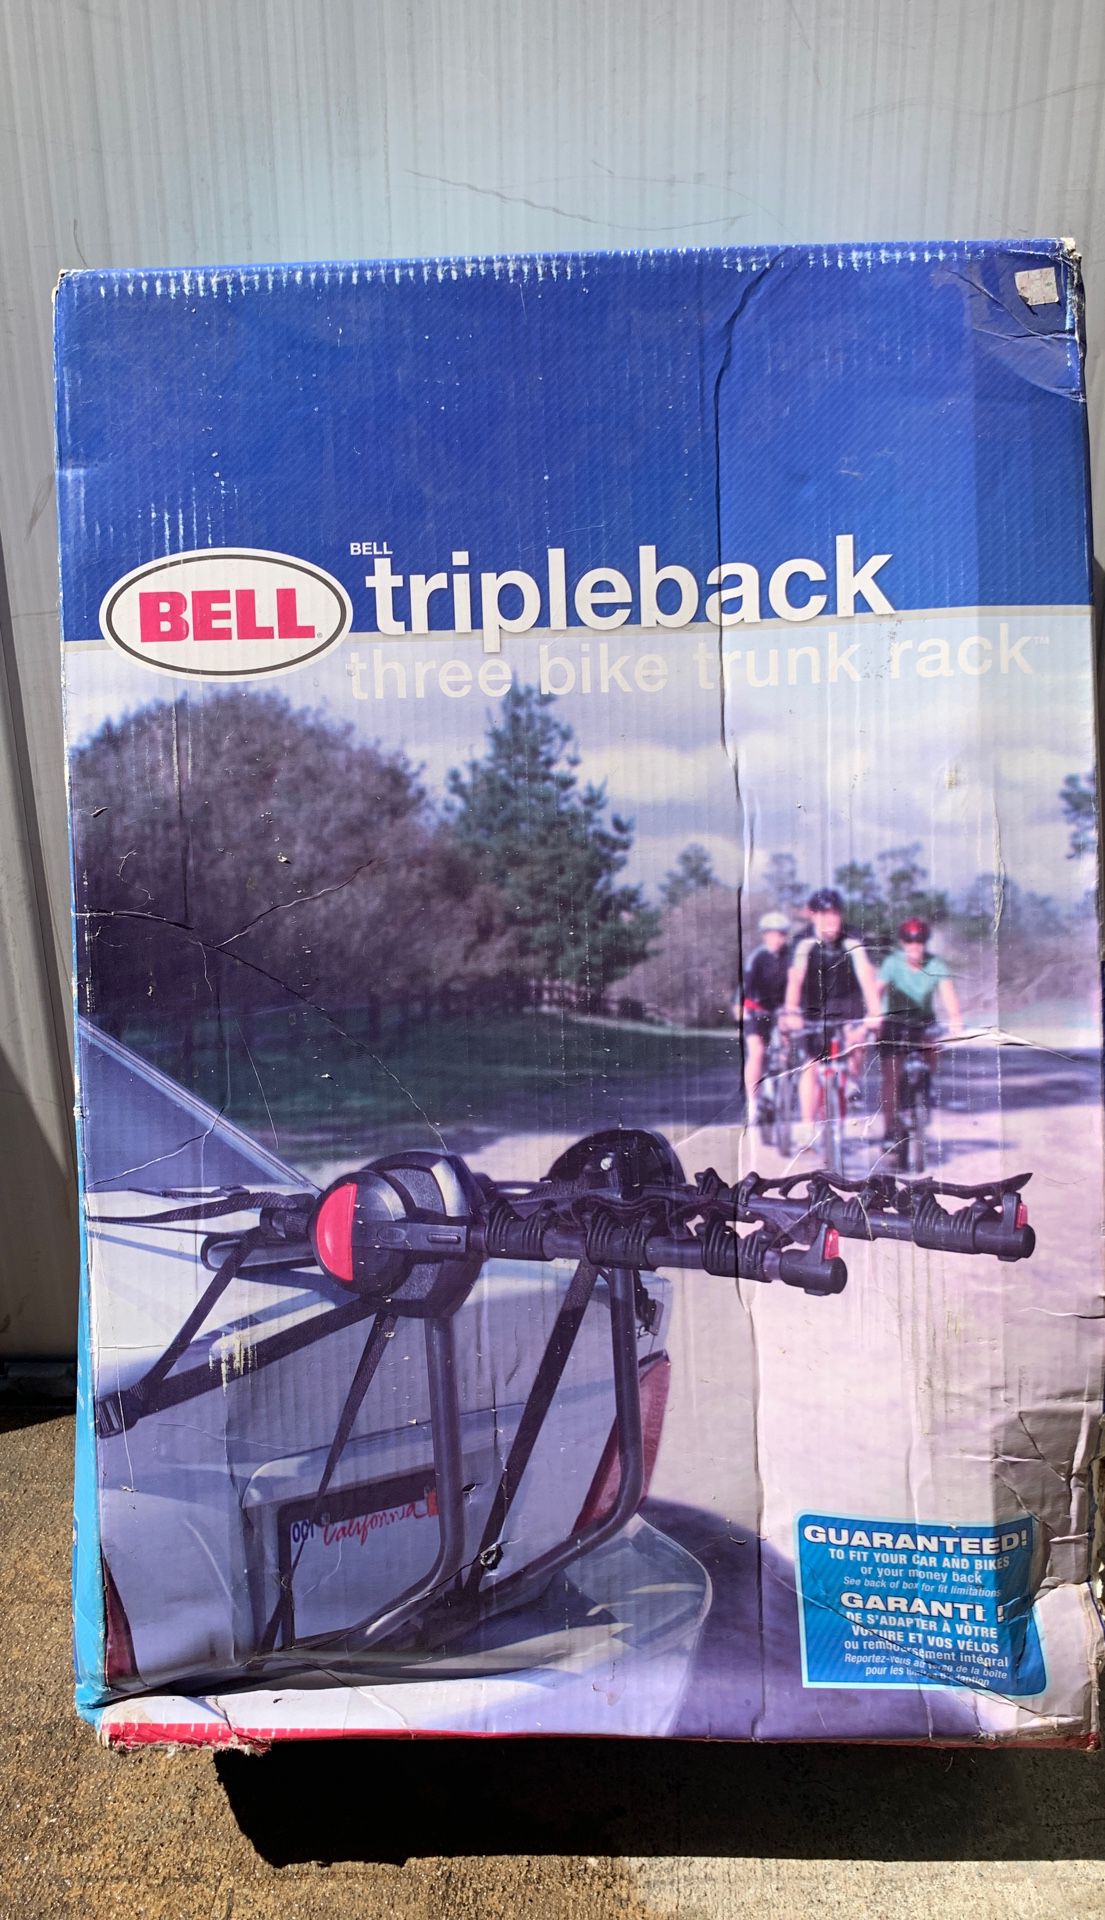 Bell Tripleback Trunk Rack